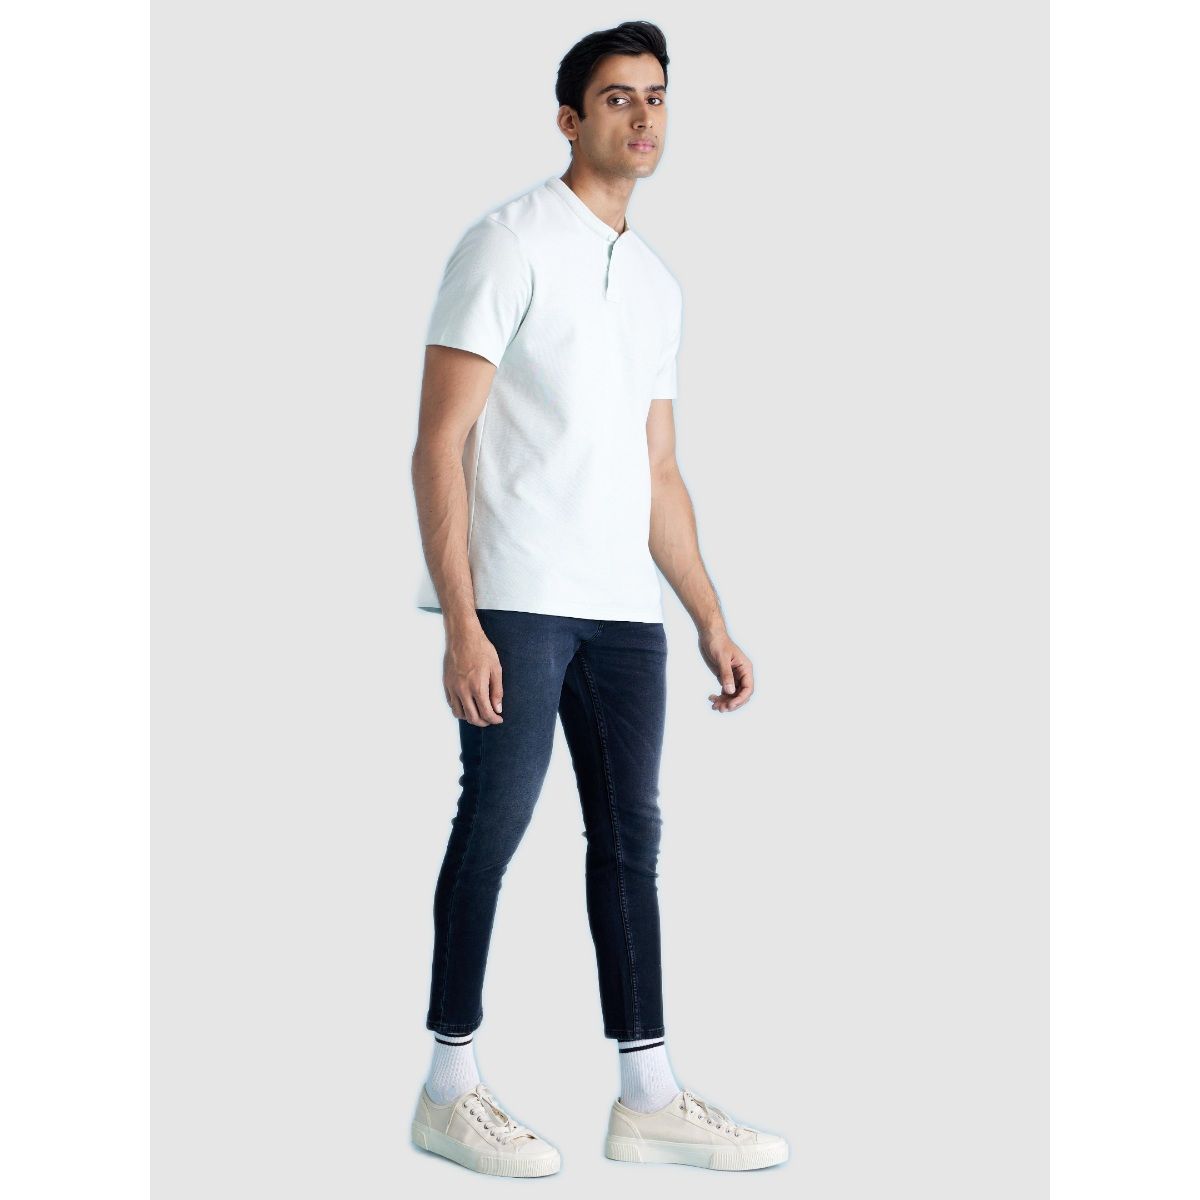 Buy CELIO Navy Blue Cotton Ankle Length Jeans Online